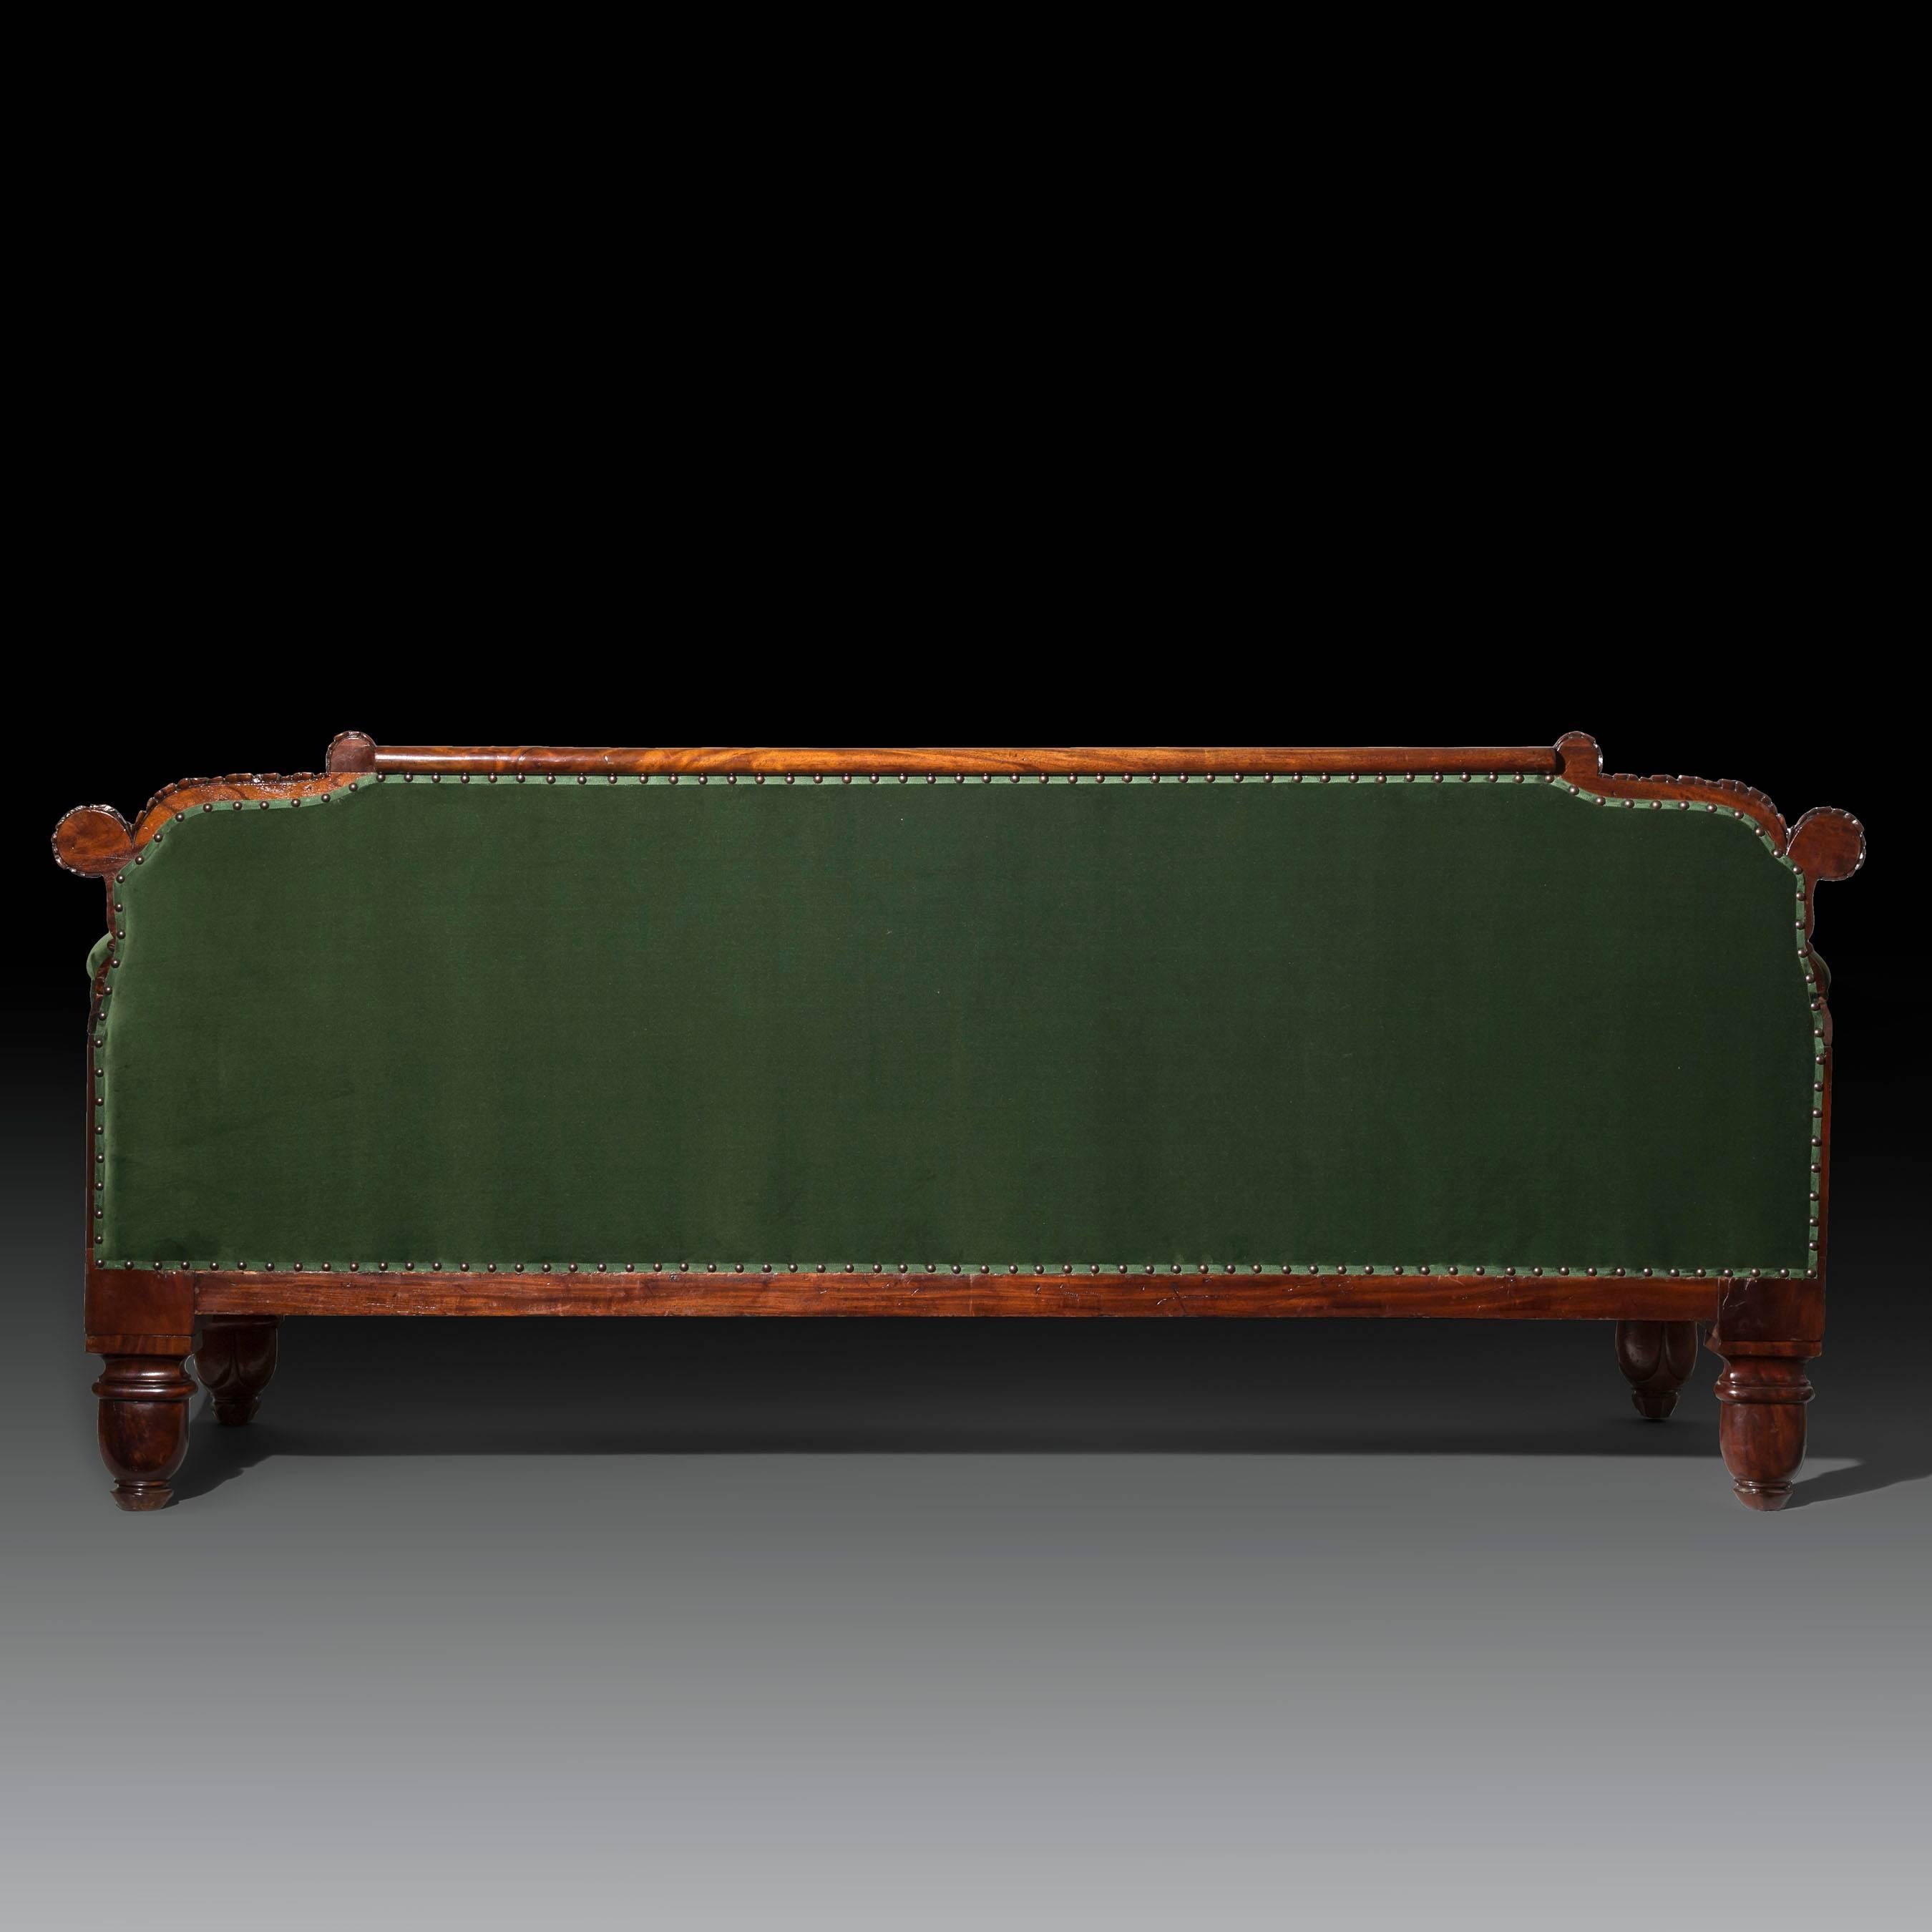 English 19th Century Regency Mahogany Sofa in Green Velvet Design by John Taylor 1